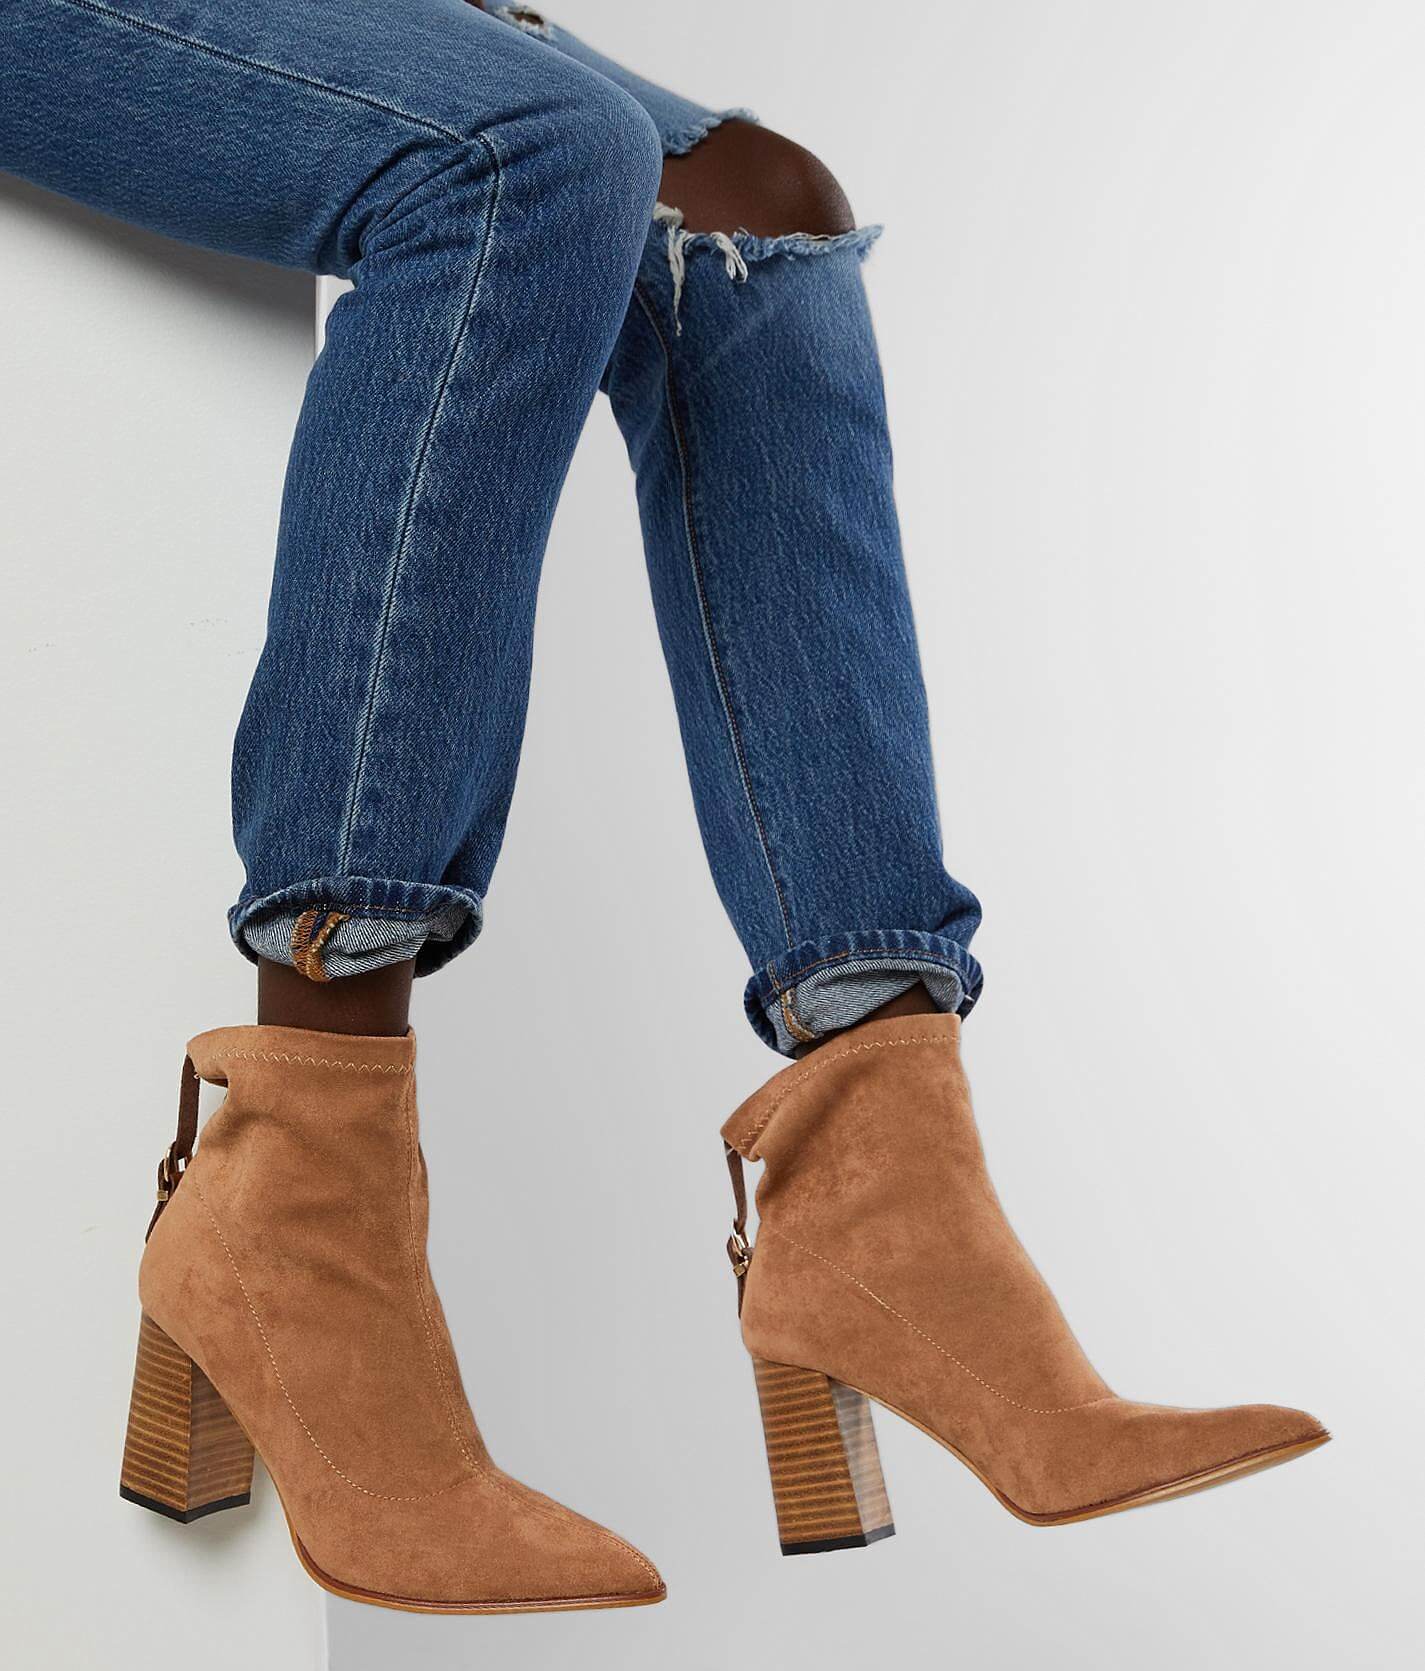 suede shoe boots women's